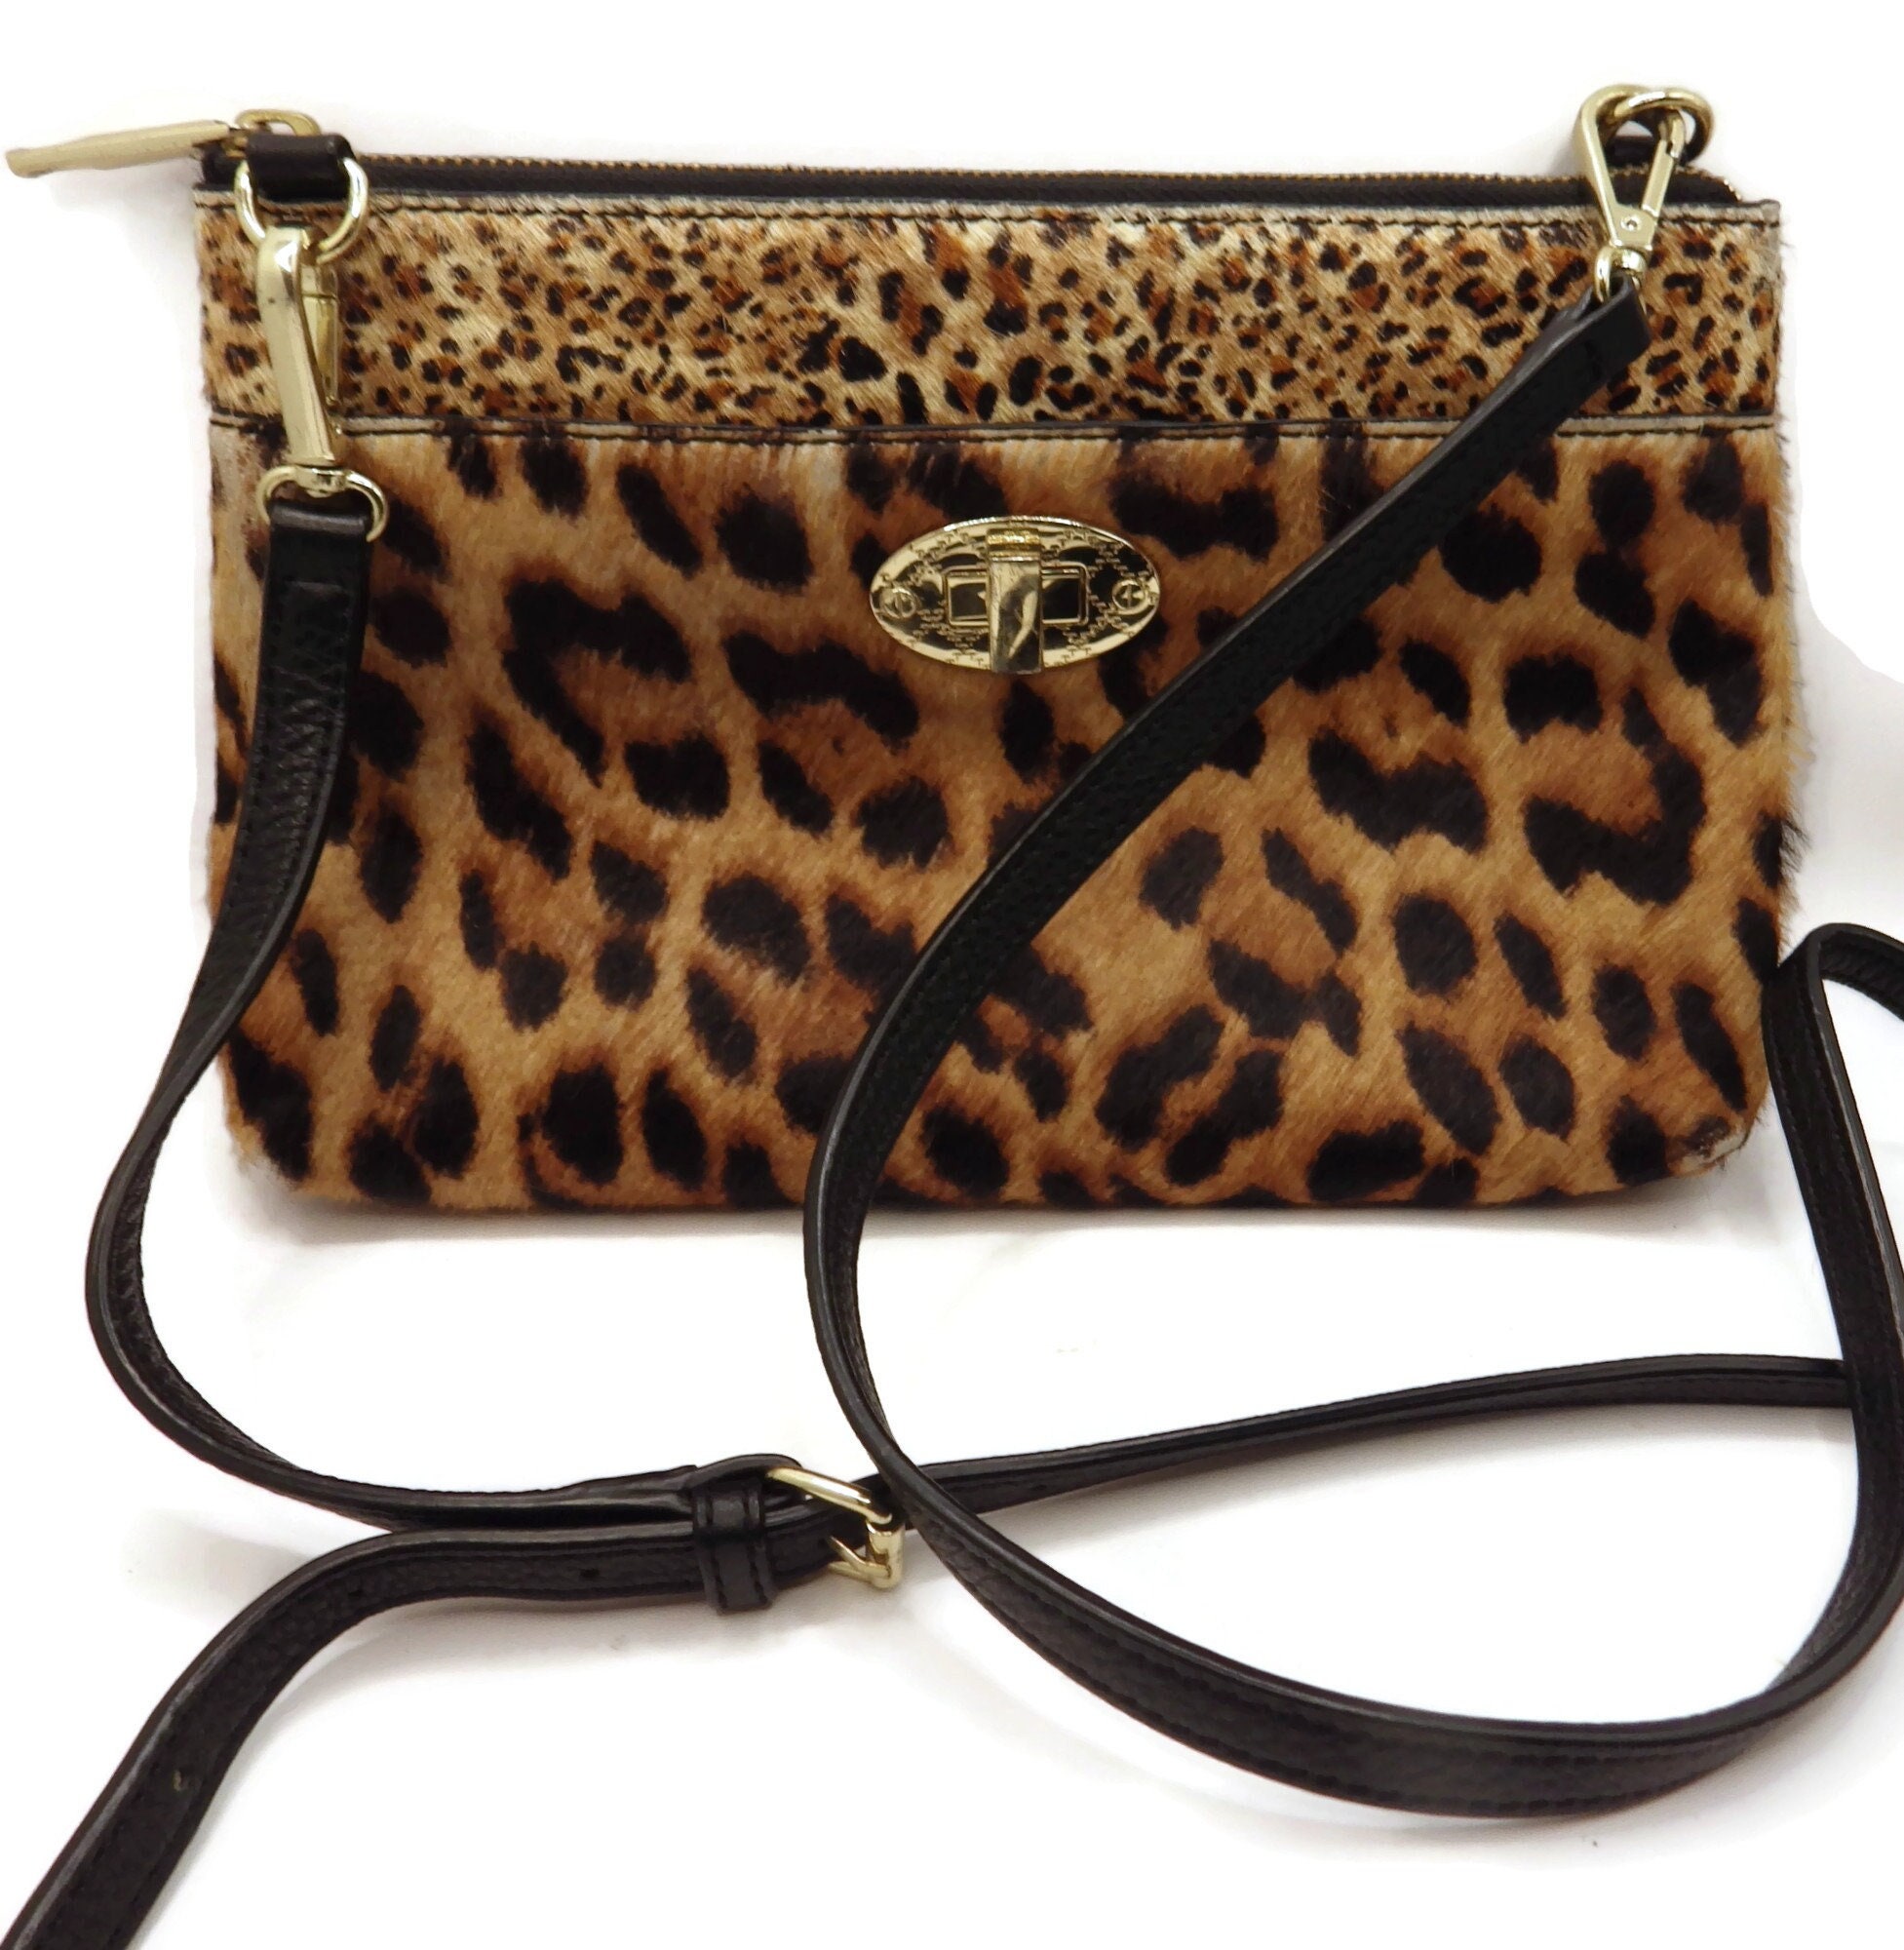 Hobo Paulette Small Crossbody Bag - Cheetah Print Limited Edition